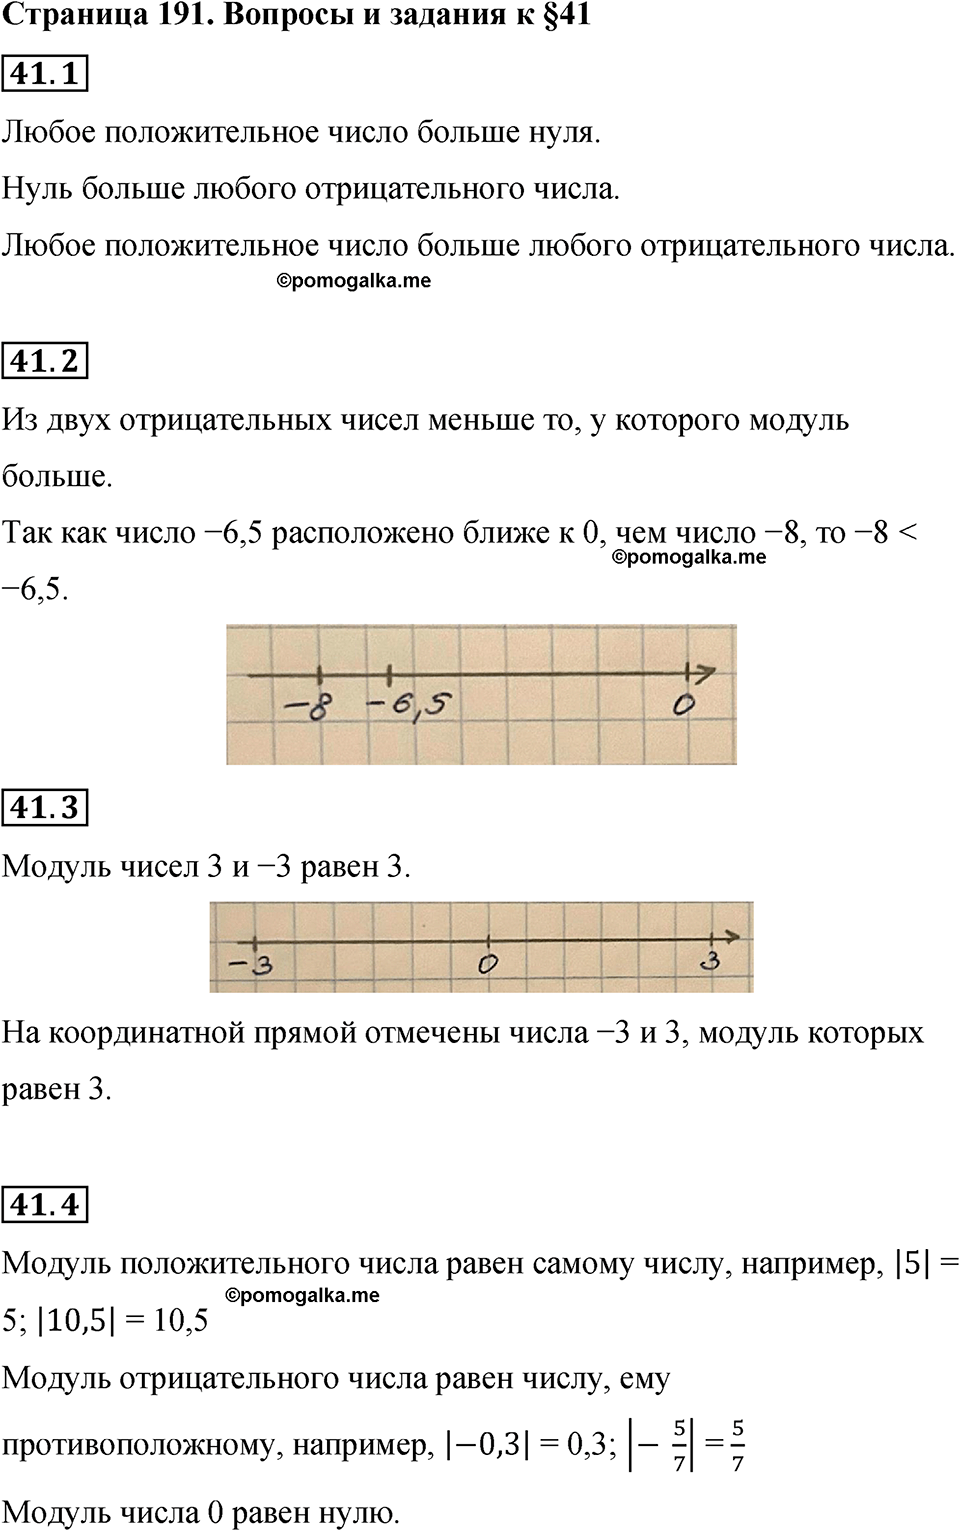 страница 191 вопросы к §41 математика 6 класс Бунимович учебник 2022 год